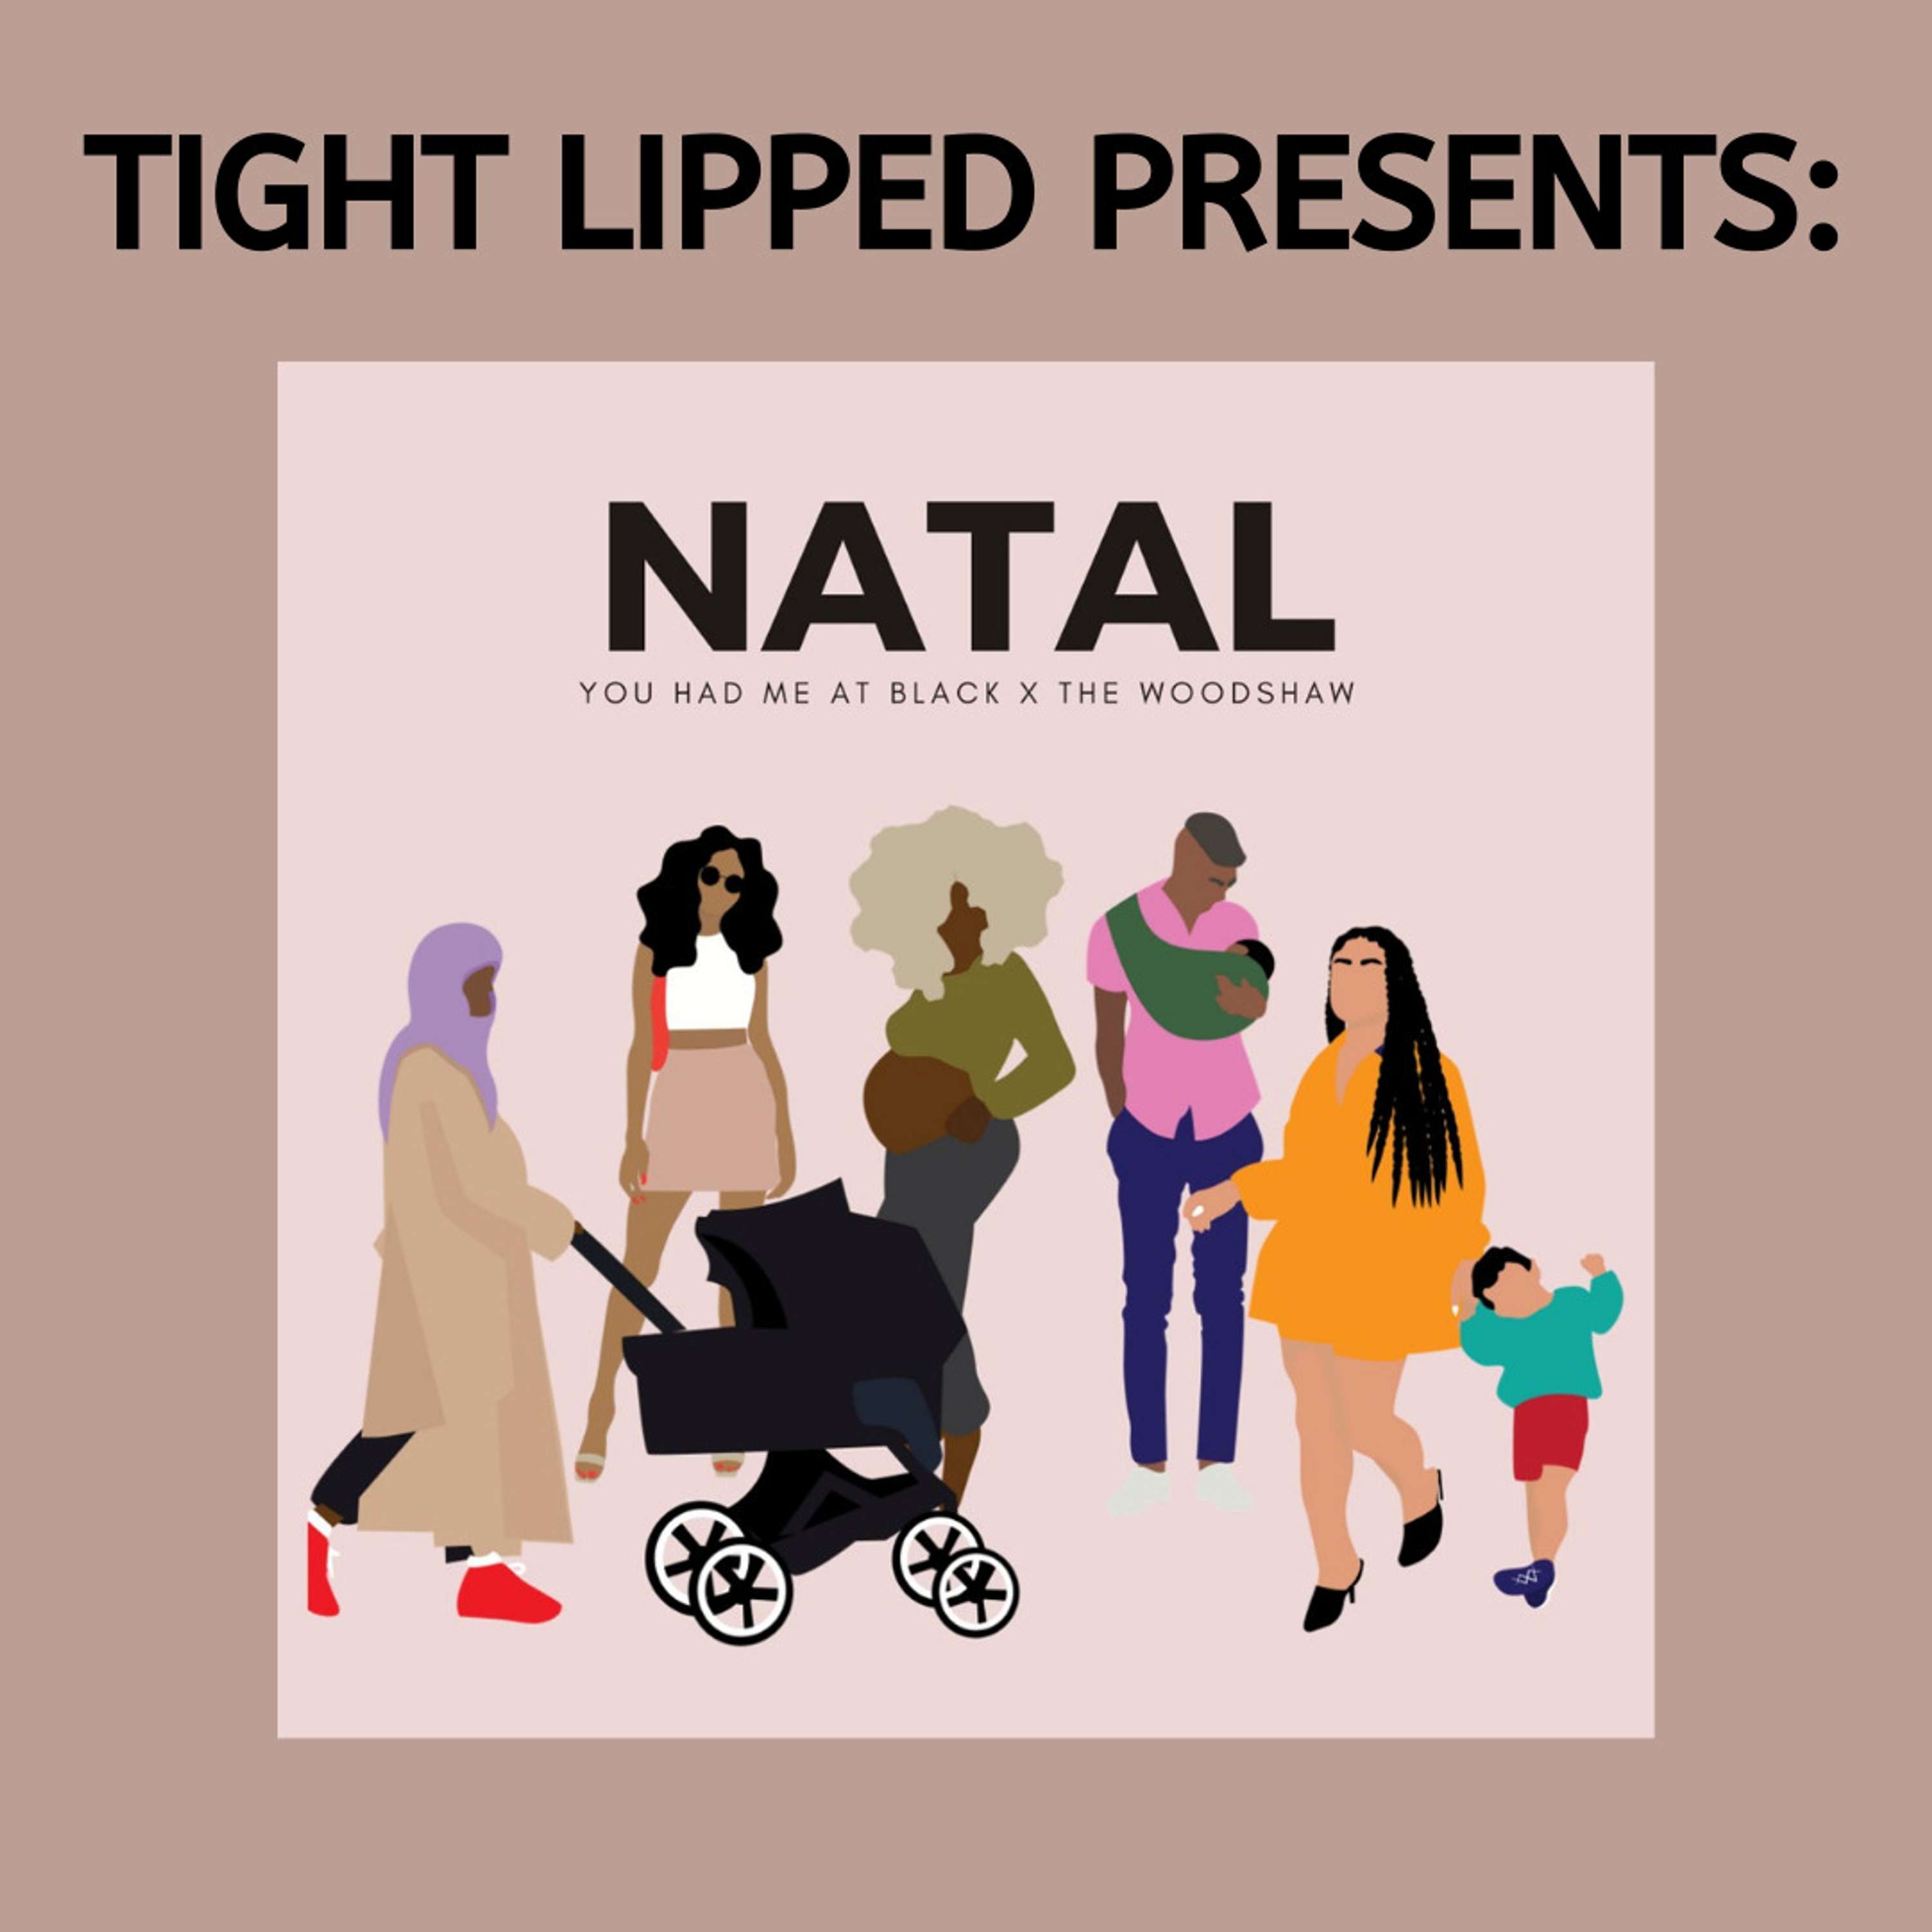 Tight Lipped Presents: NATAL